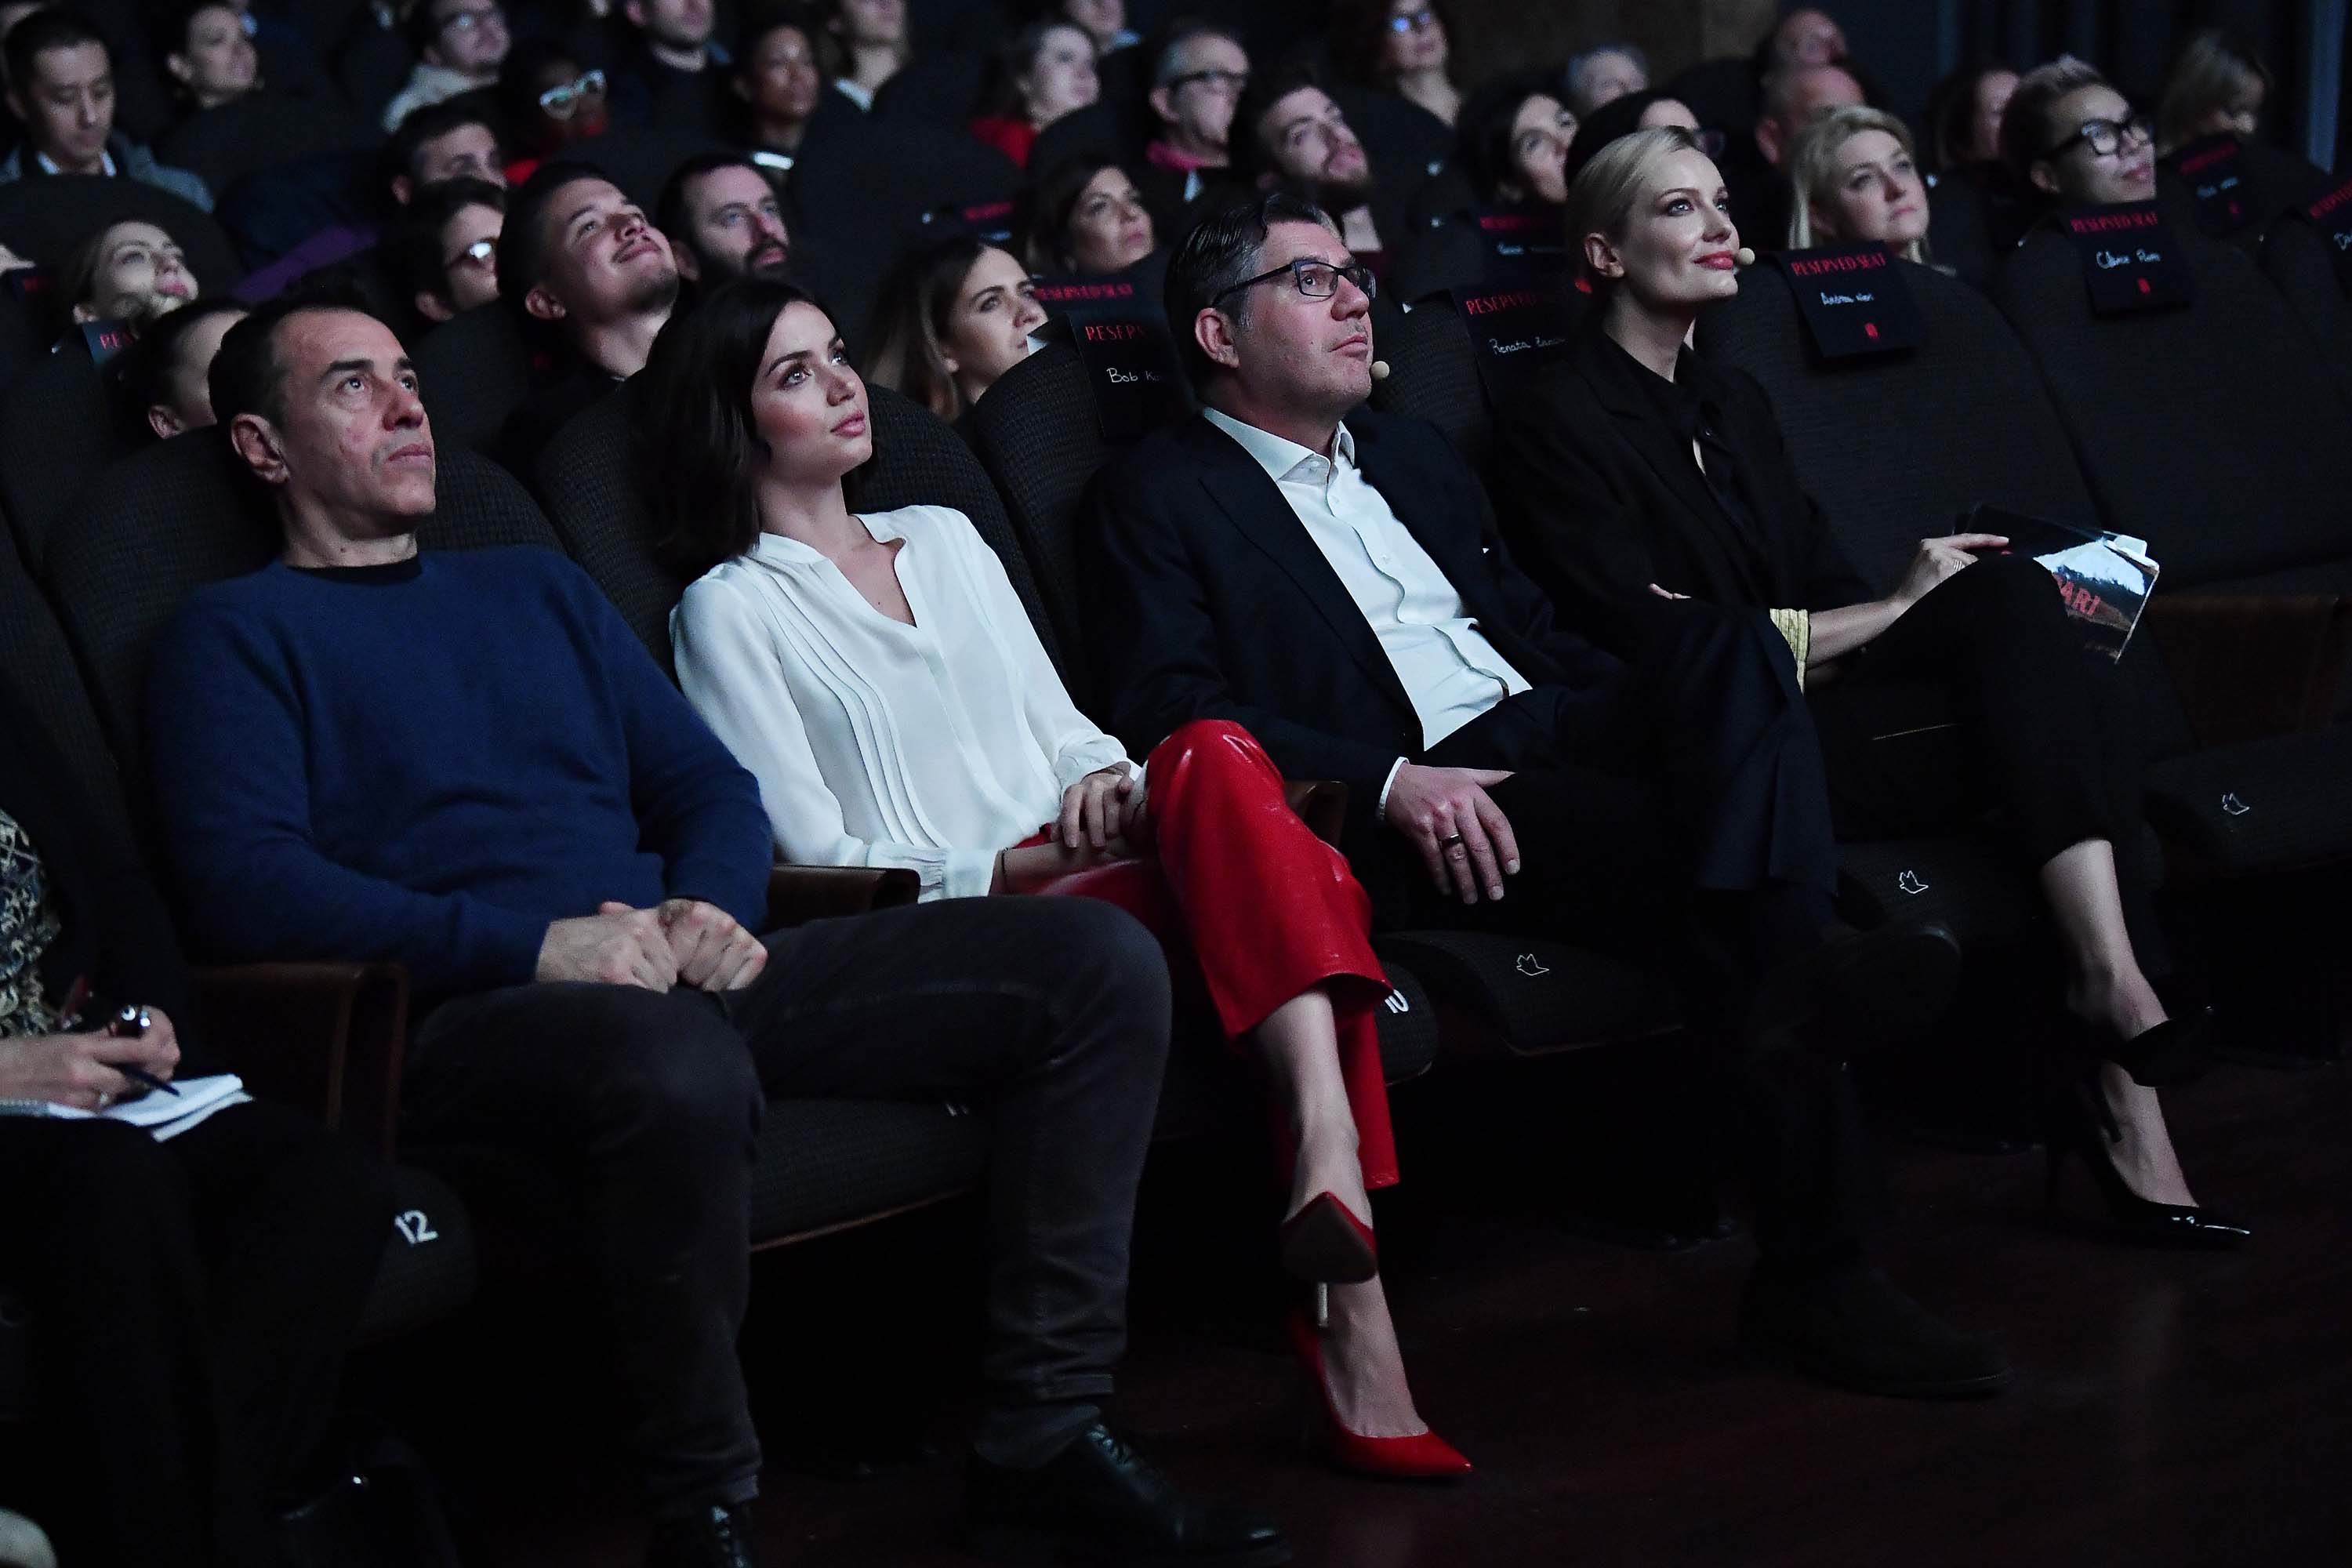 Ana de Armas attends Campari Red Diaries 2019 Press Conference